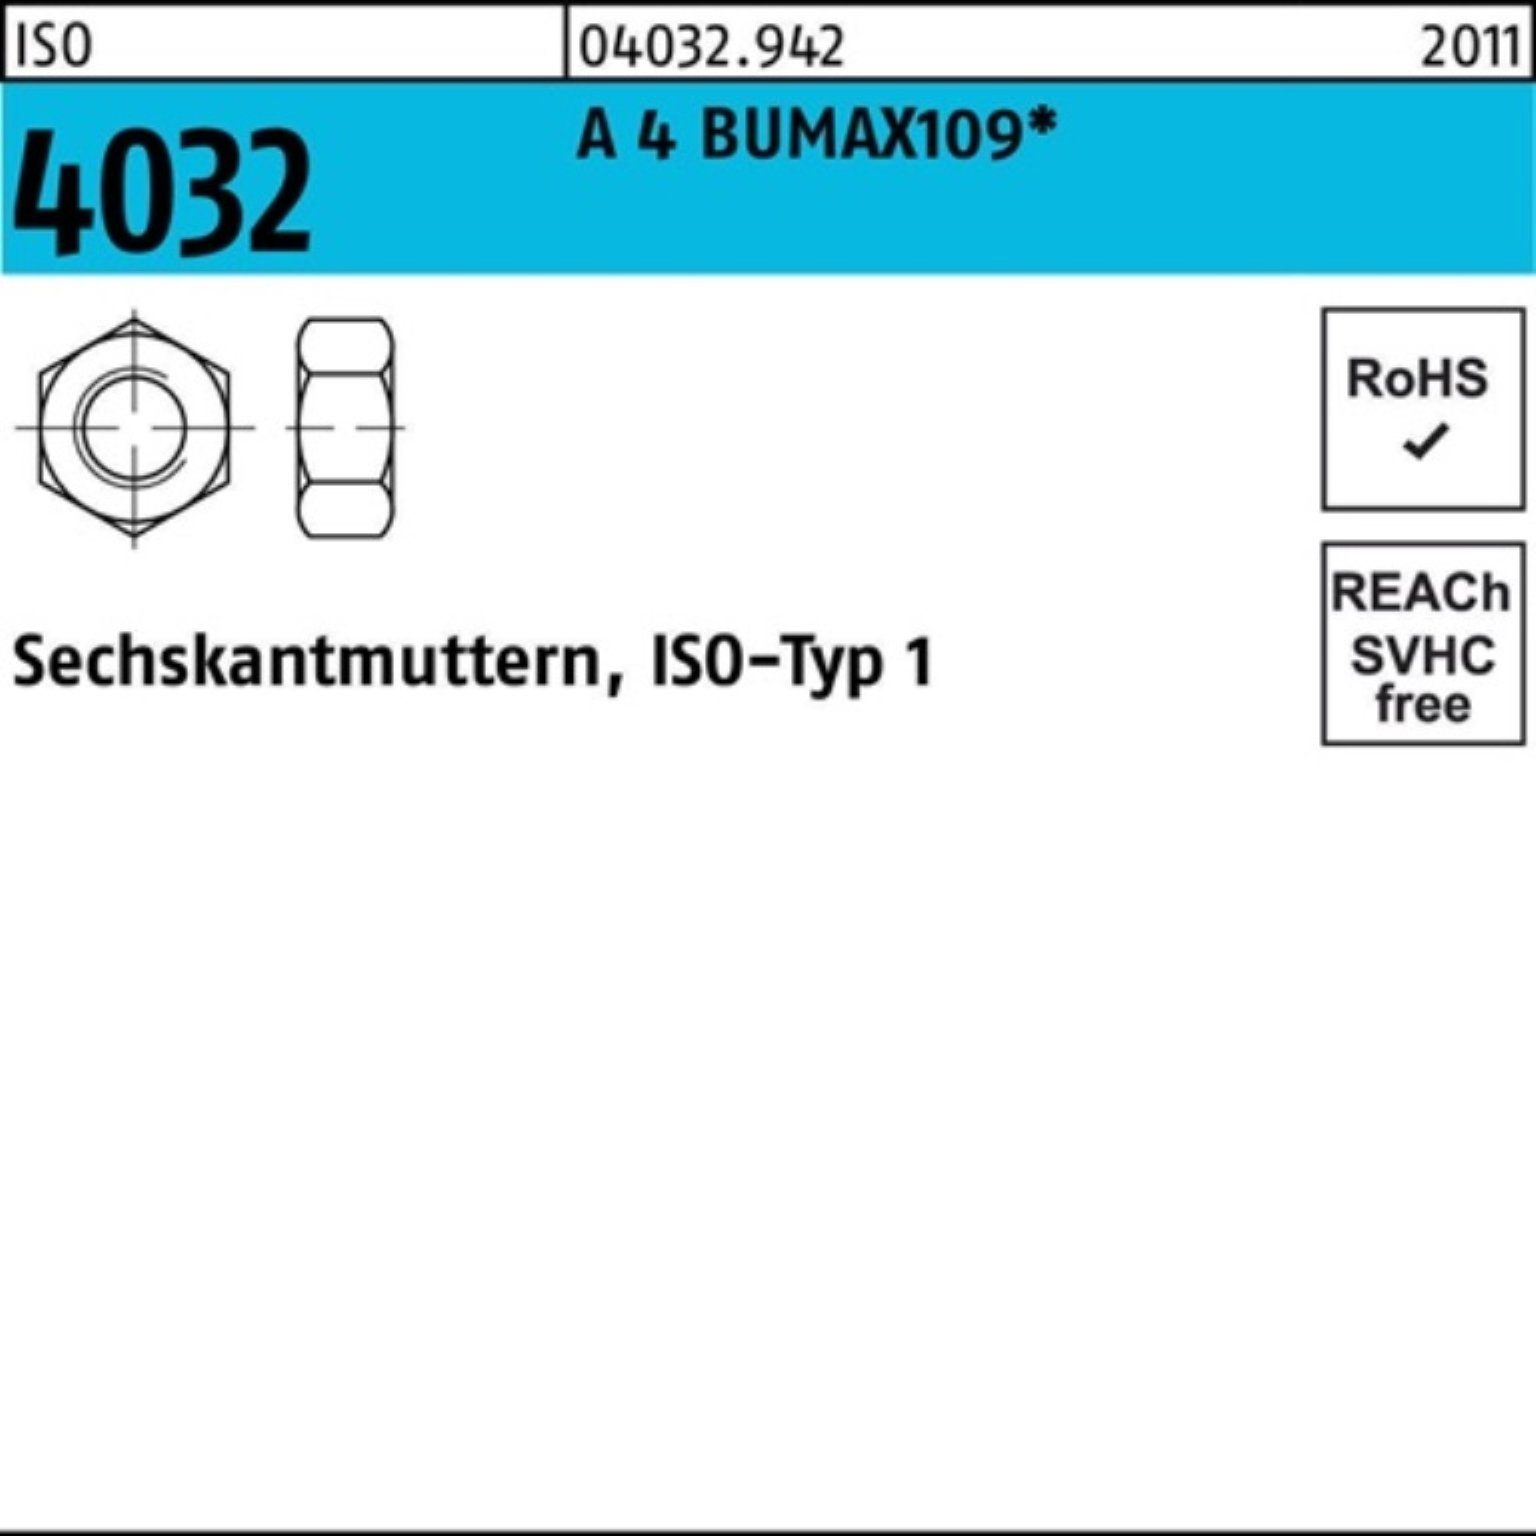 Bufab Muttern 100er Pack Sechskantmutter BUFAB 4032 I Stück M6 100 ISO A 4 BUMAX109